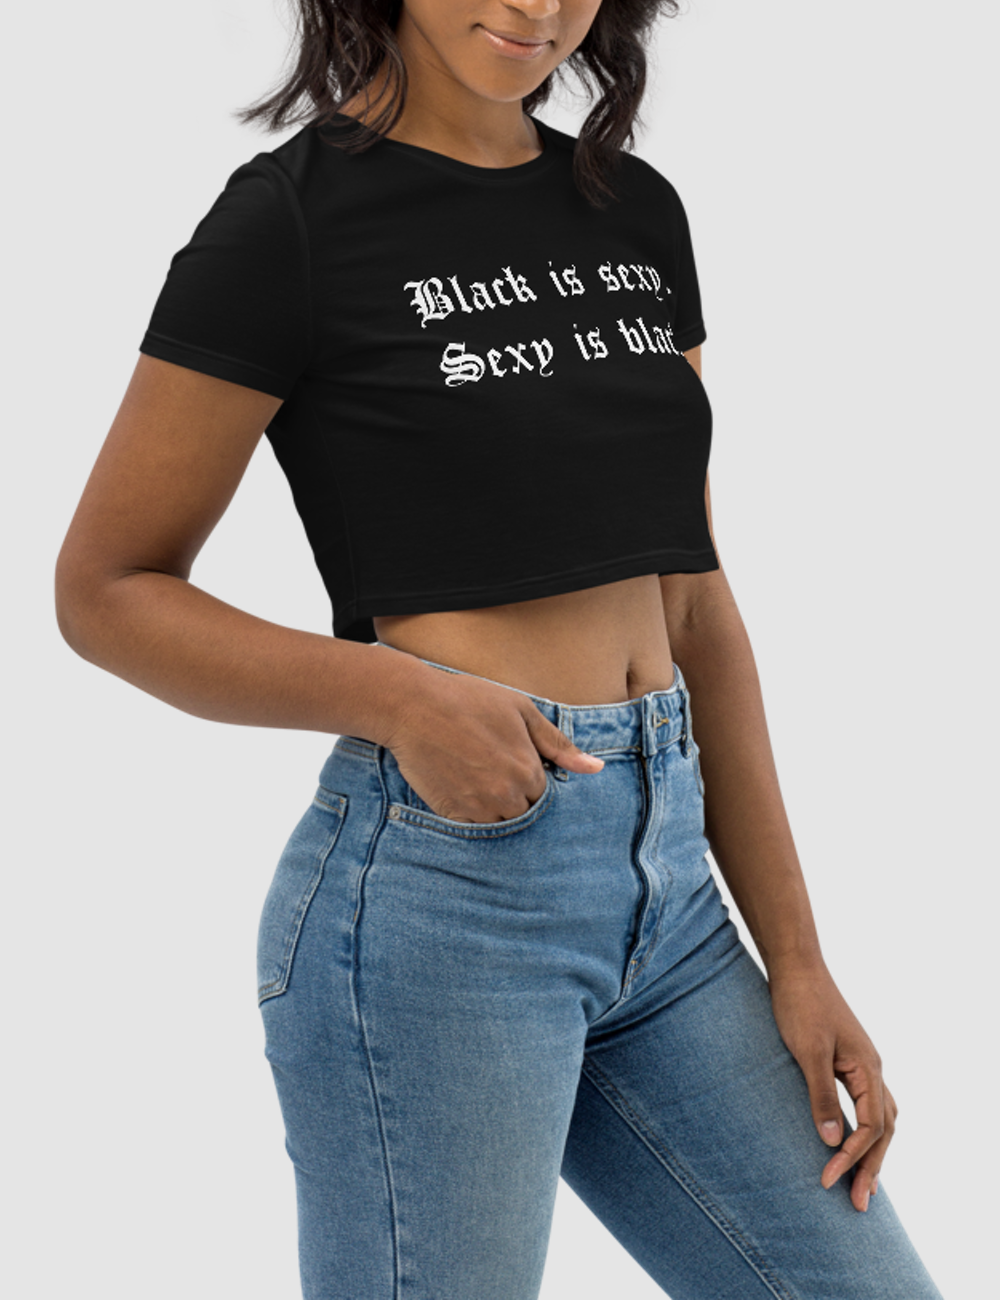 Black Is Sexy. Sexy Is Black. | Women's Crop Top T-Shirt OniTakai